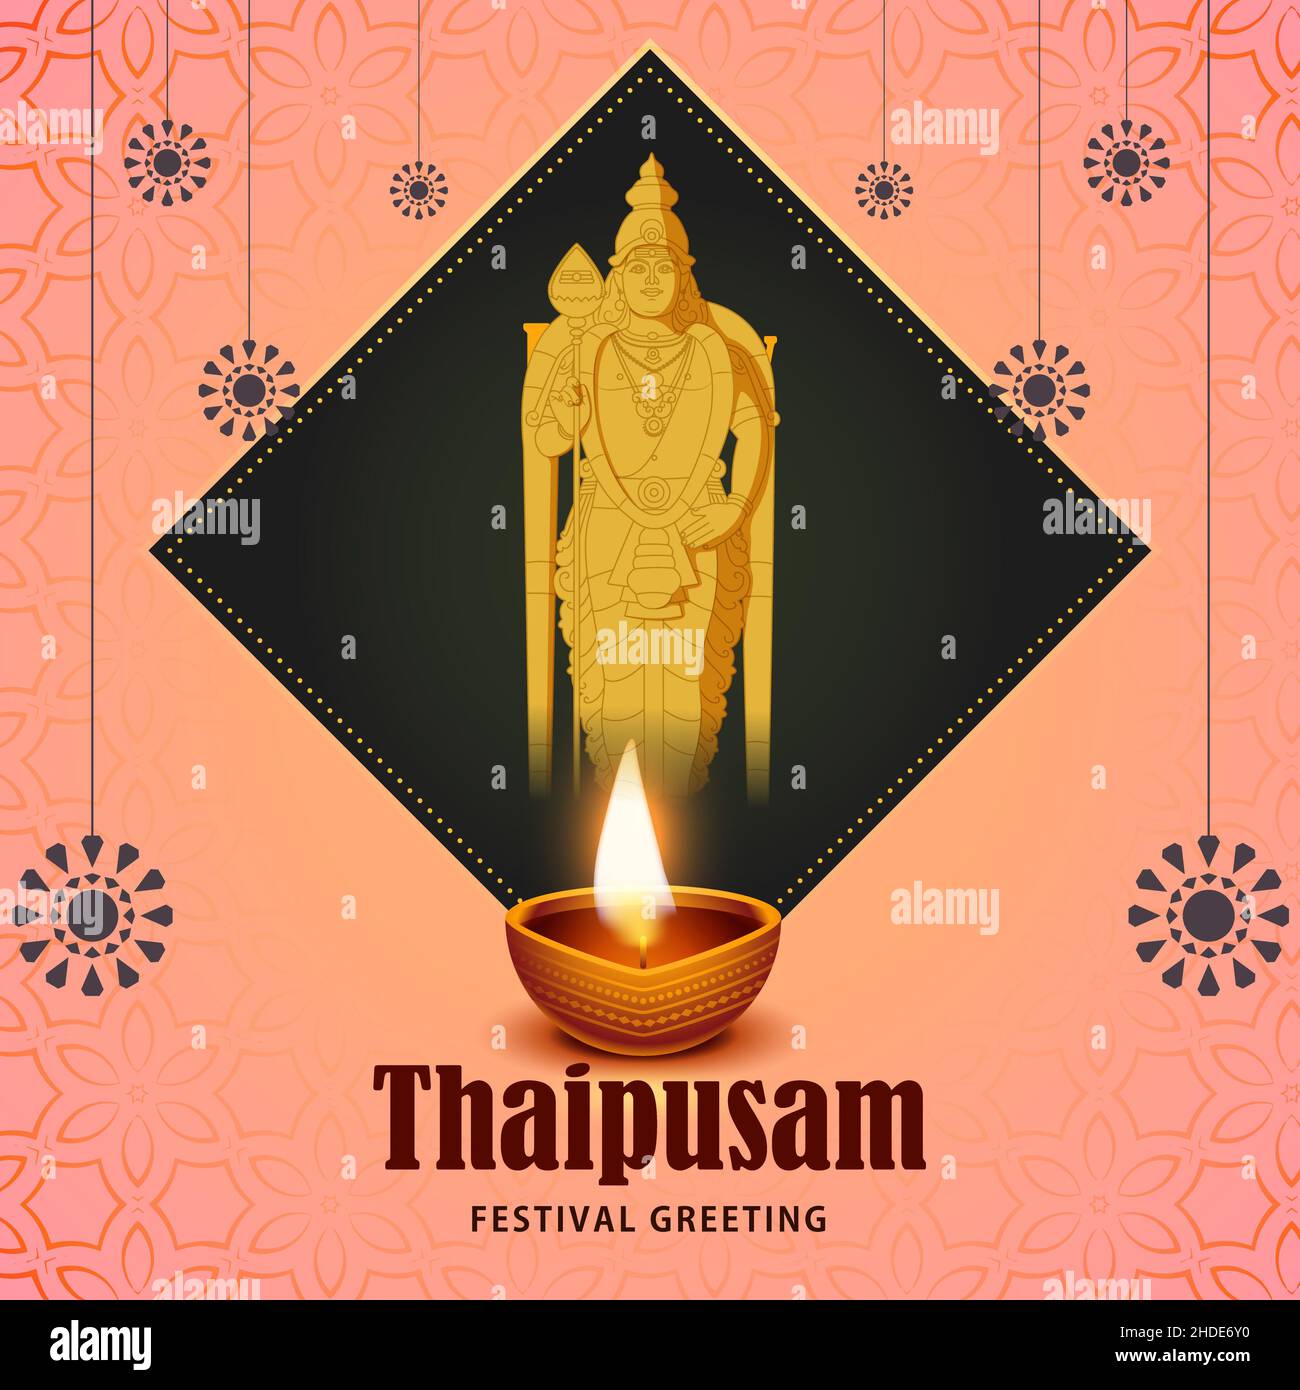 Happy Thaipusam card New Design 2022 Stock Photo